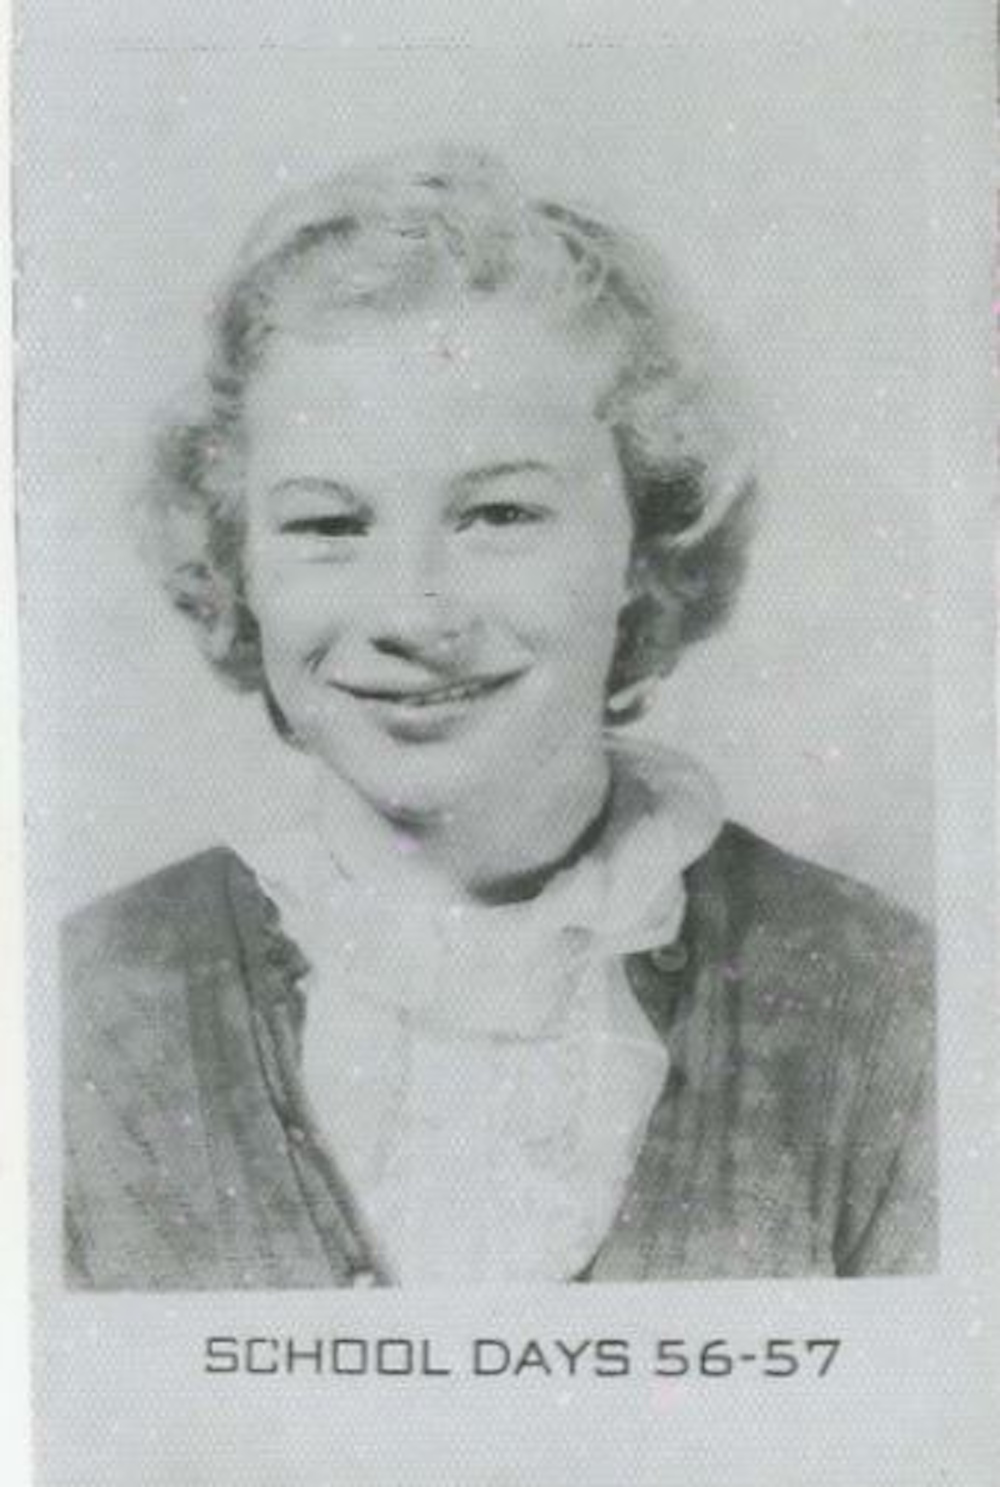 Anna in 1956-57, a school picture